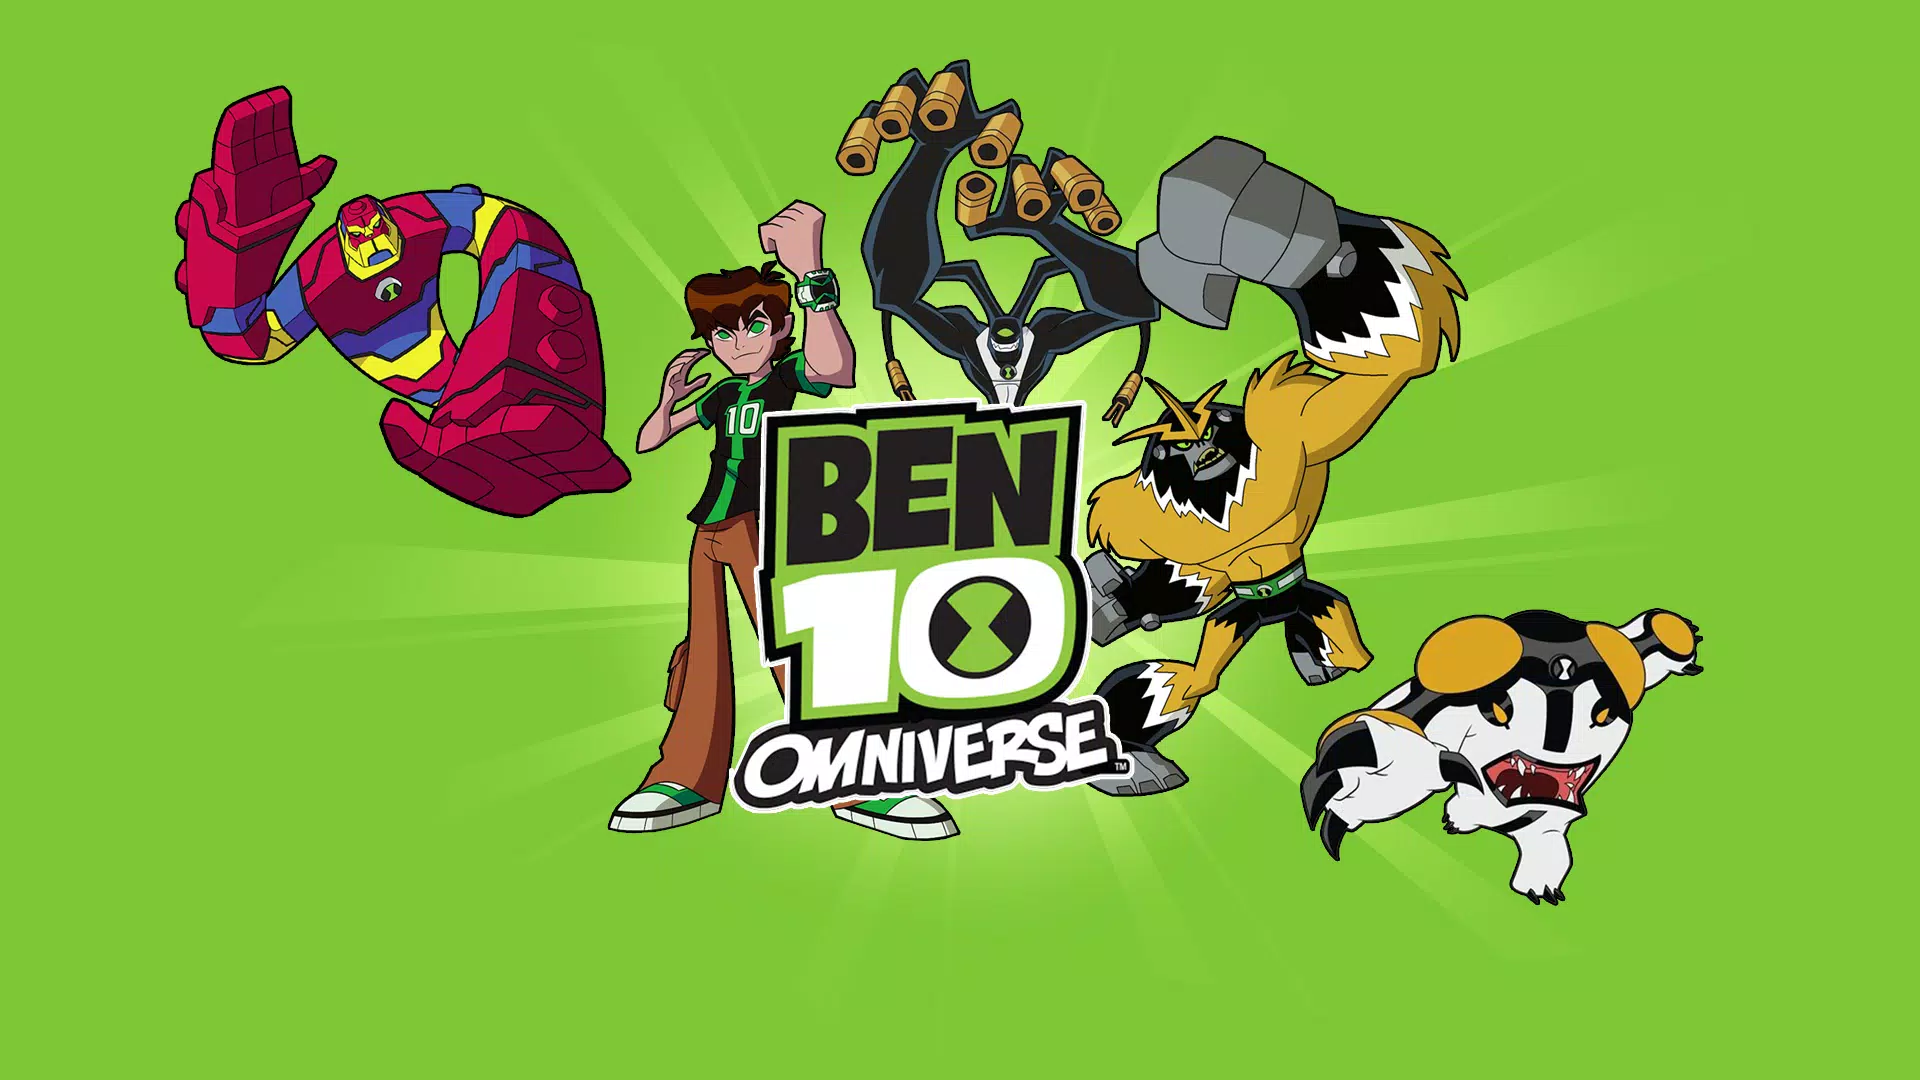 Play* Ben 10 Omniverse games online free